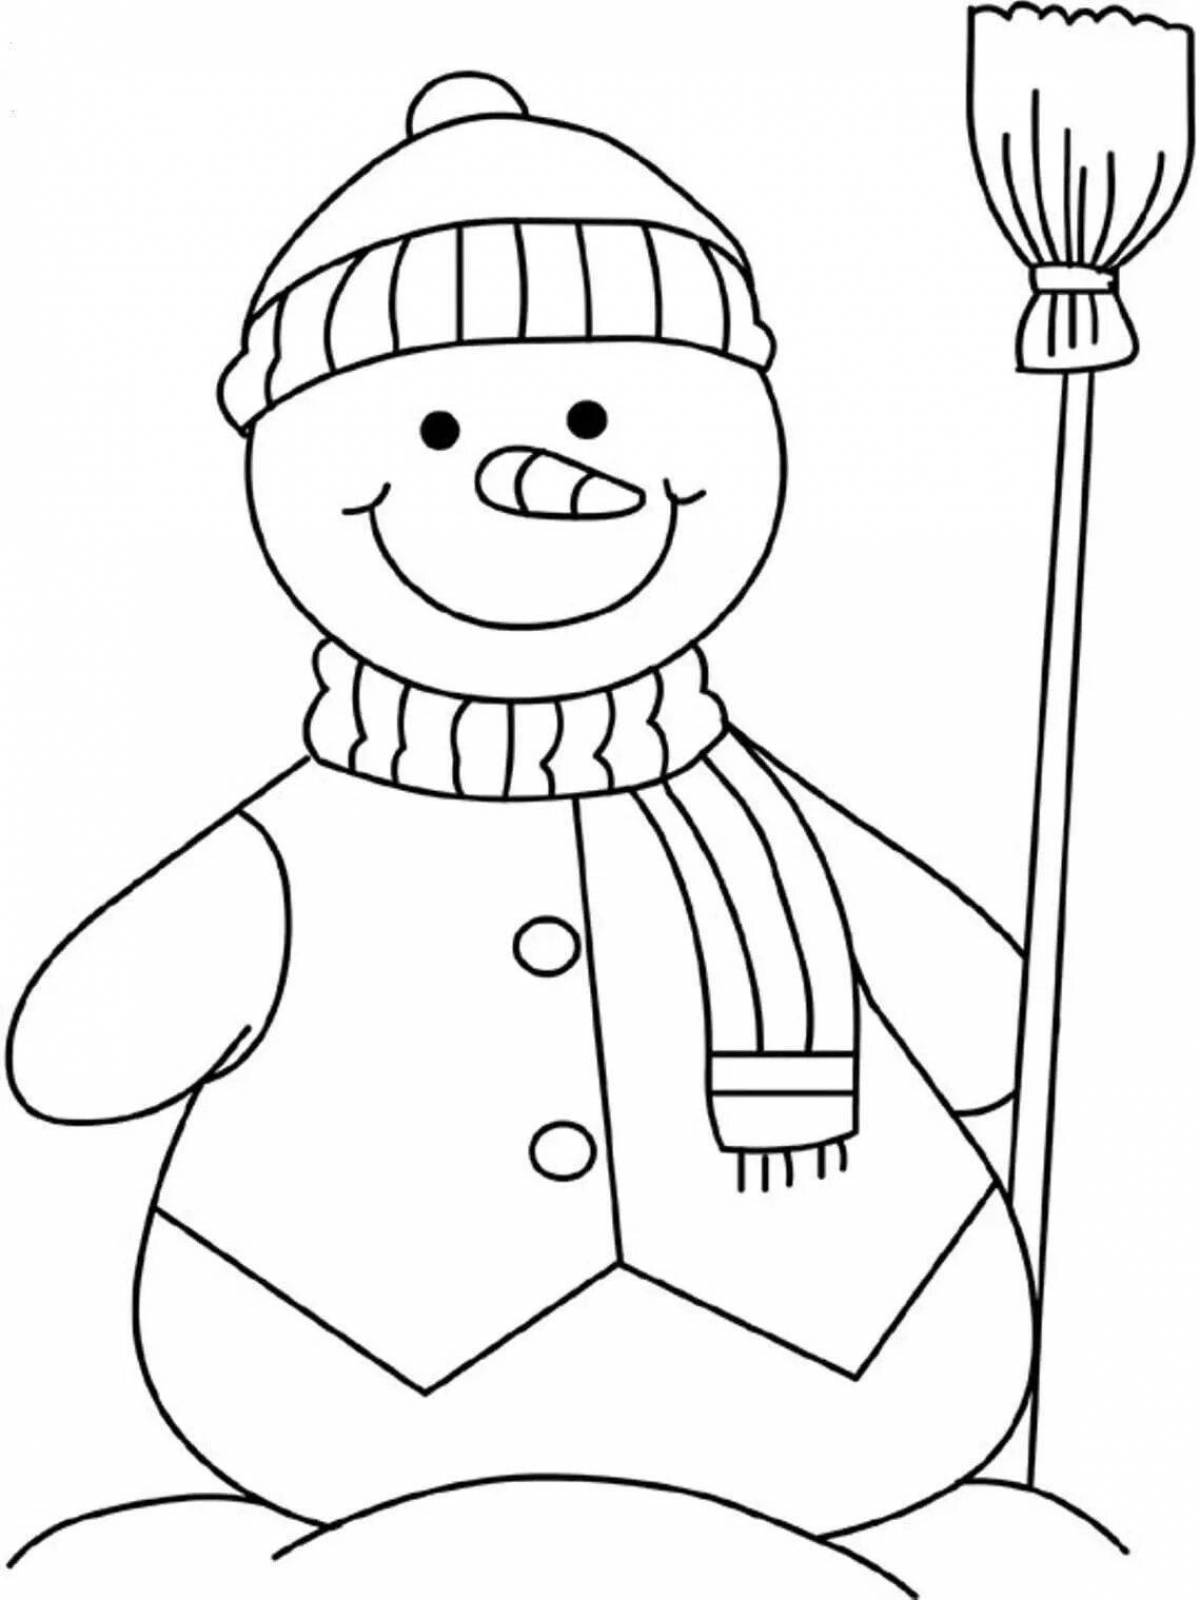 Joyful snowman drawing for kids